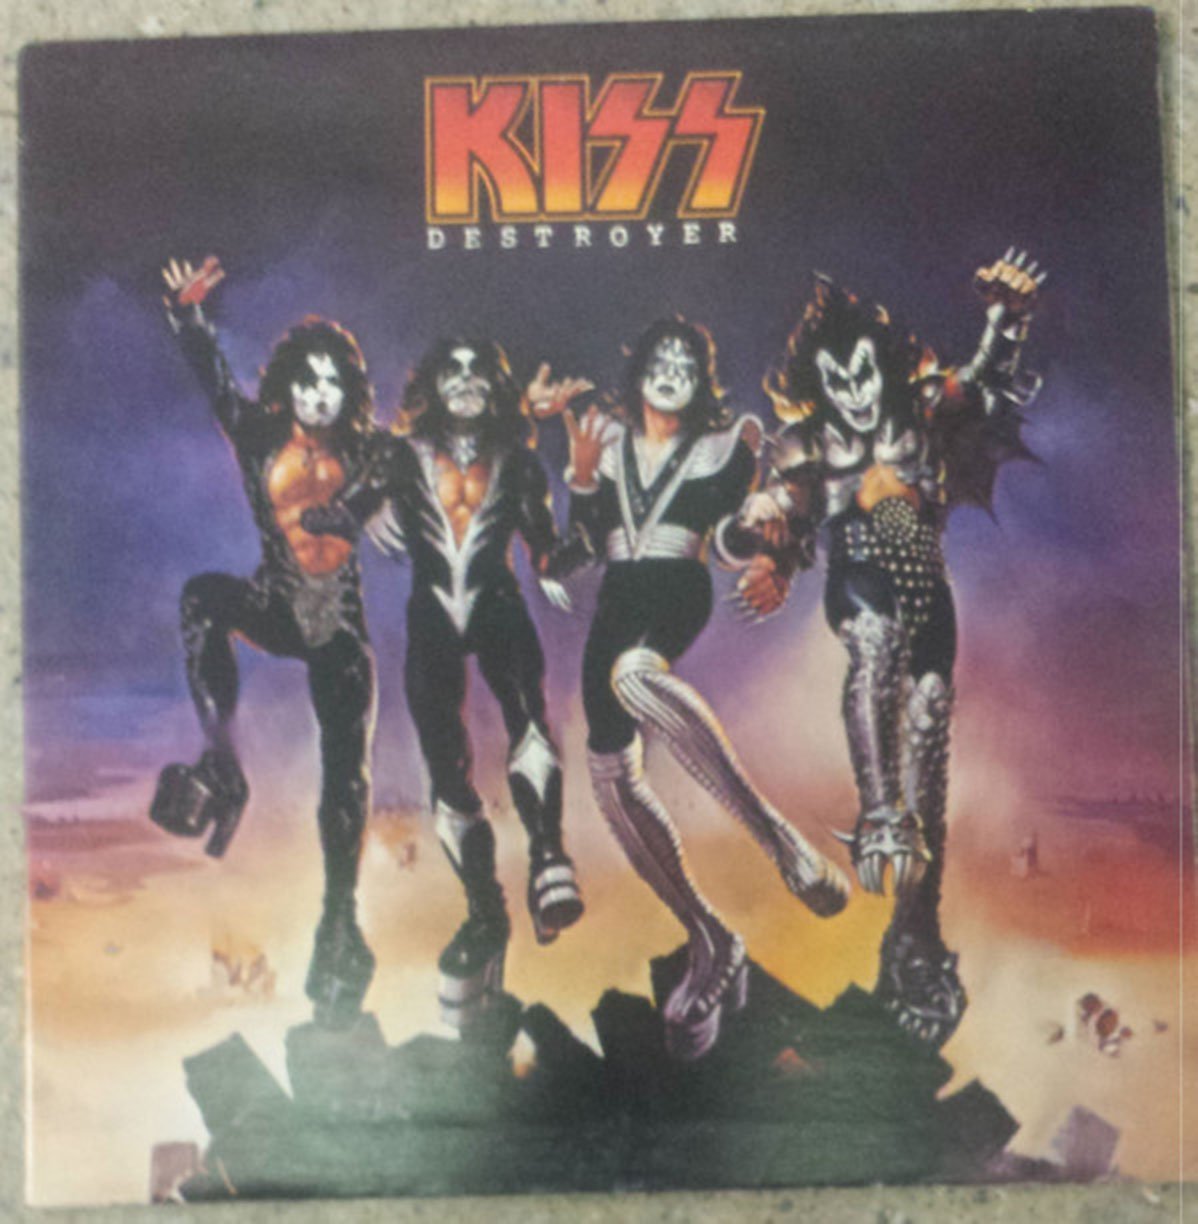 kiss destroyer album cover